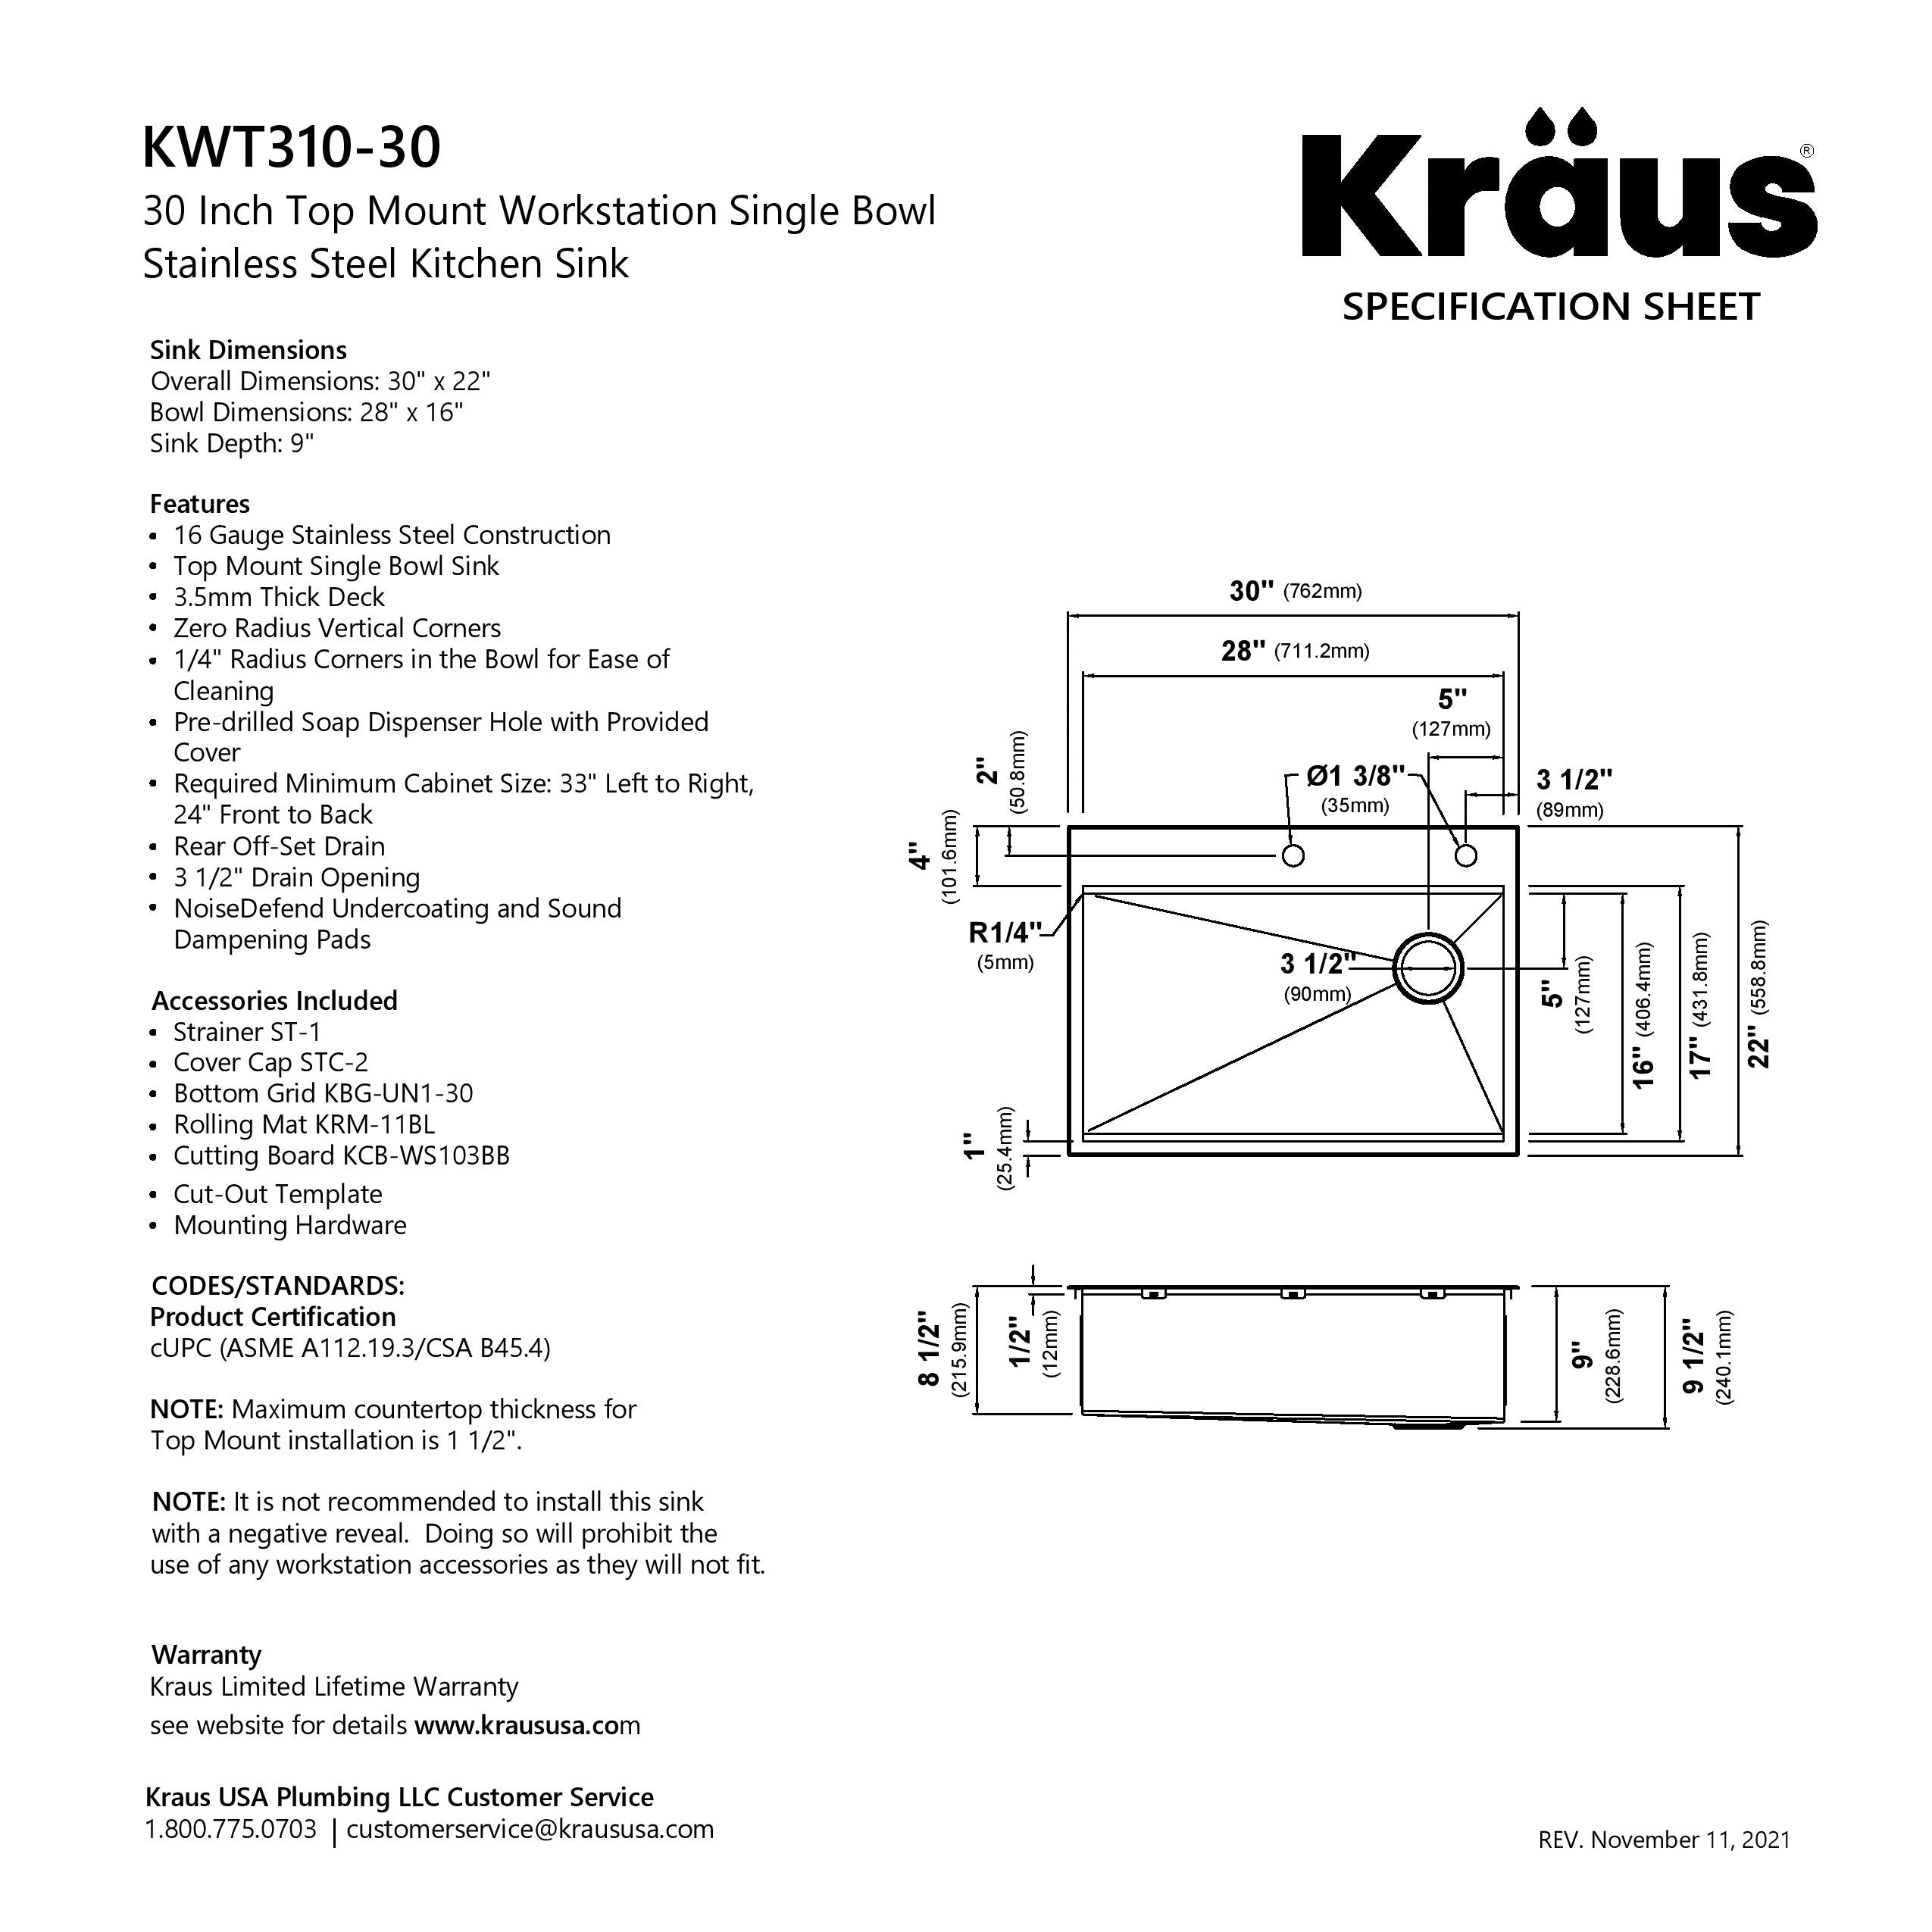 KRAUS Kore 30" Drop-In Workstation 16 Gauge Stainless Steel Single Bowl Kitchen Sink with Accessories